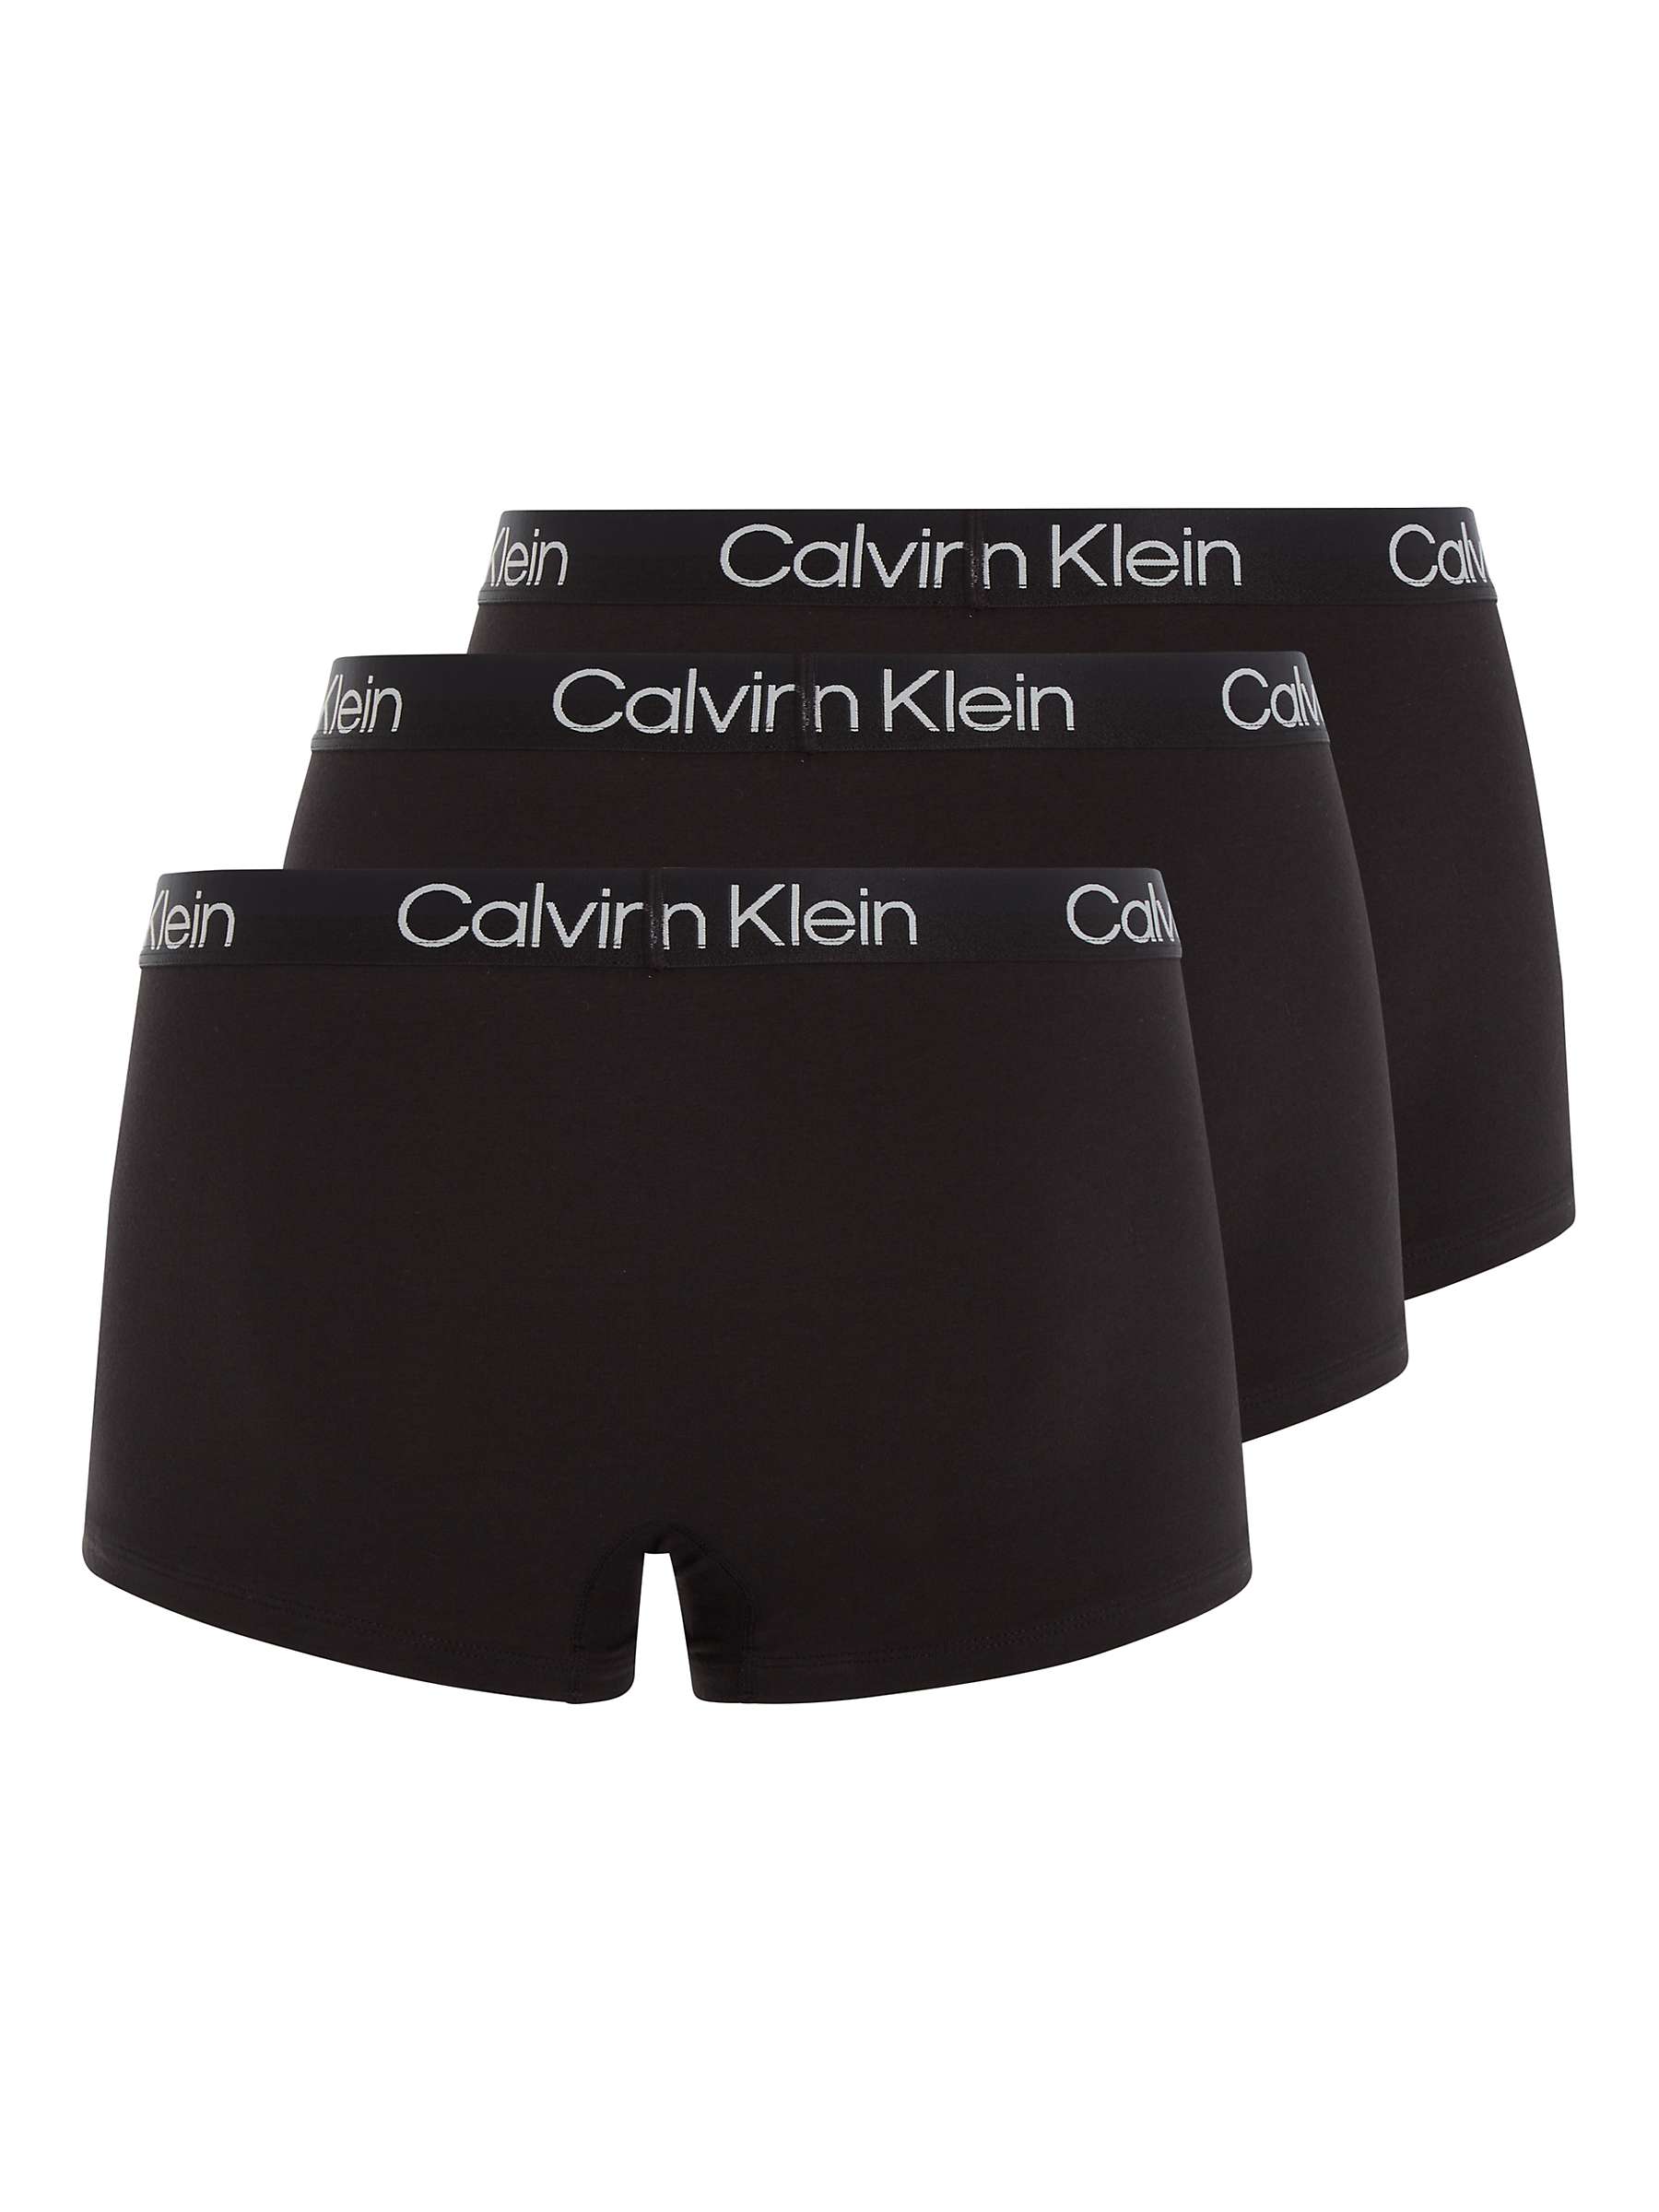 Calvin Klein Stretch Cotton Trunks, Pack of 3, Black at John Lewis ...